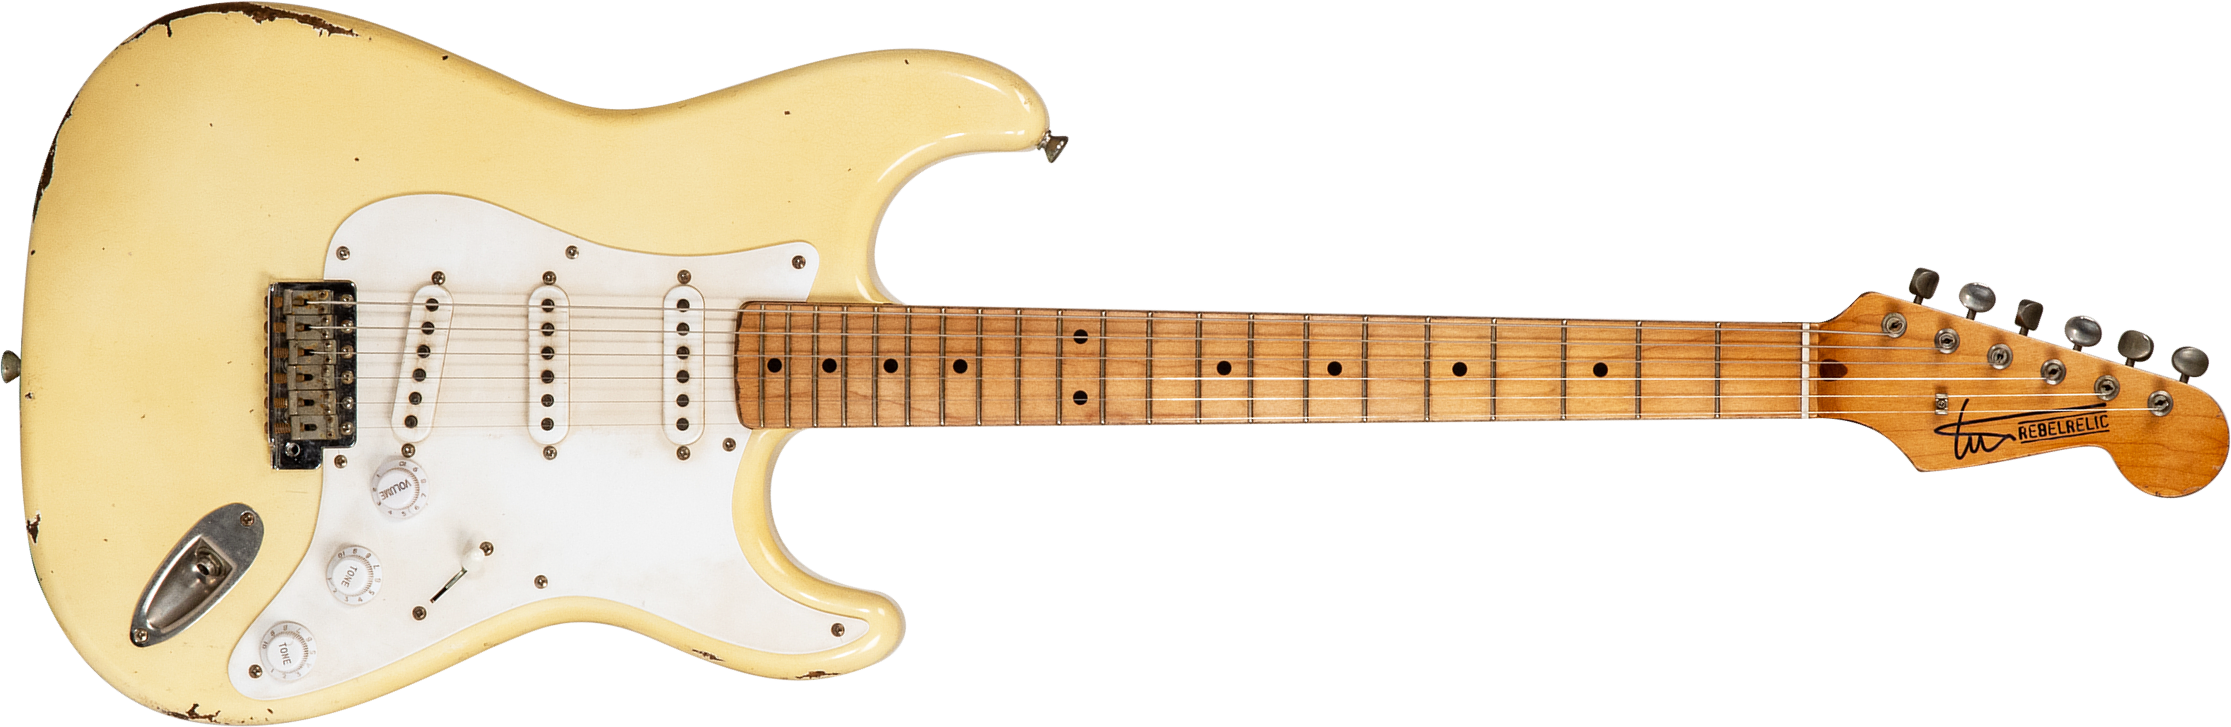 Rebelrelic S-series 55 3s Trem Mn #62191 - Light Aged Banana - Elektrische gitaar in Str-vorm - Main picture